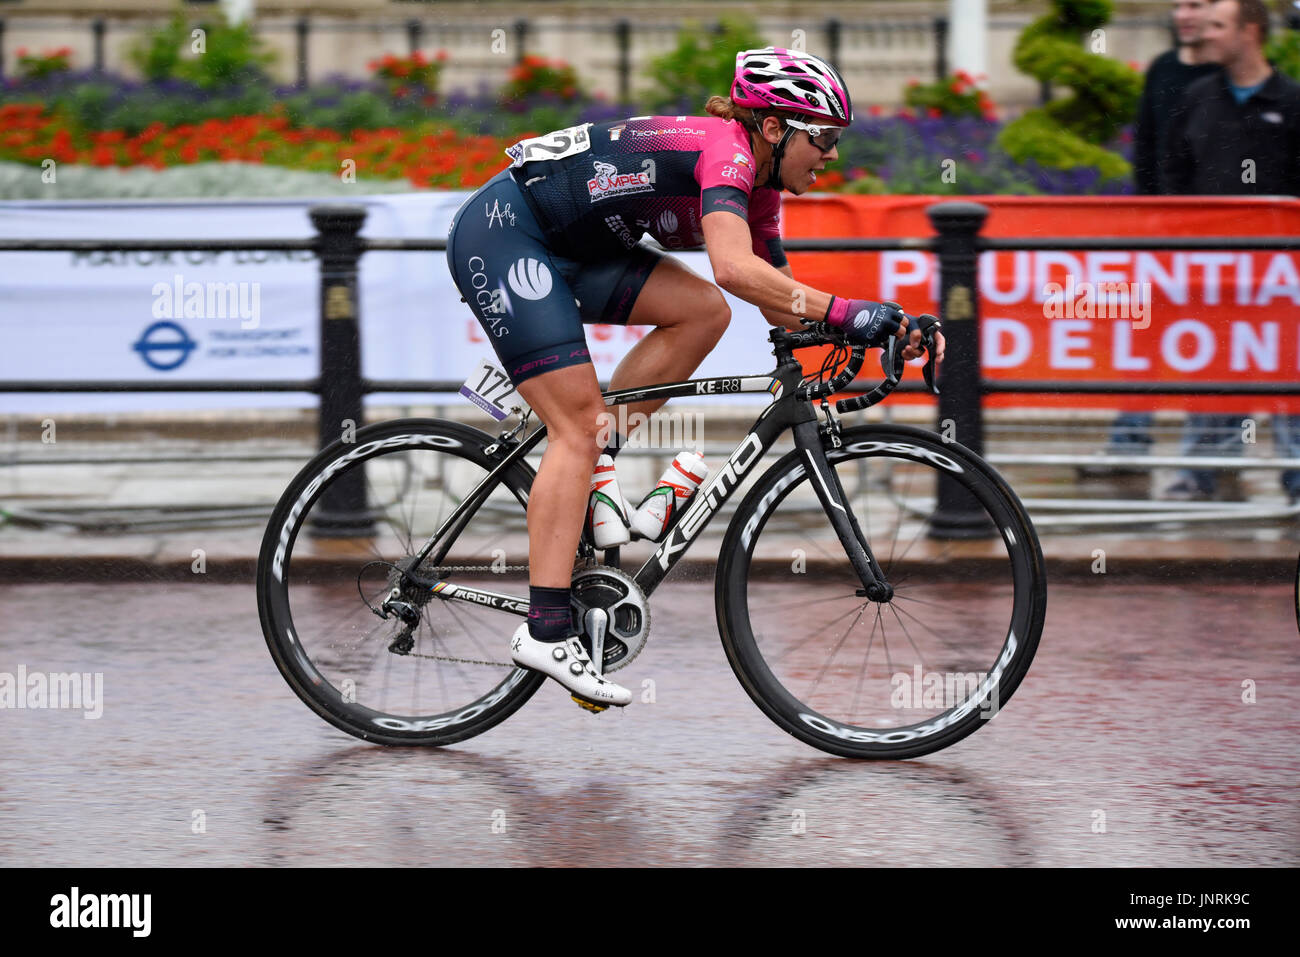 Classique UCI World Tour carrera de ciclismo profesional para mujeres.  Parte del evento de ciclismo Ride London en St. James's Park, Reino Unido  Fotografía de stock - Alamy